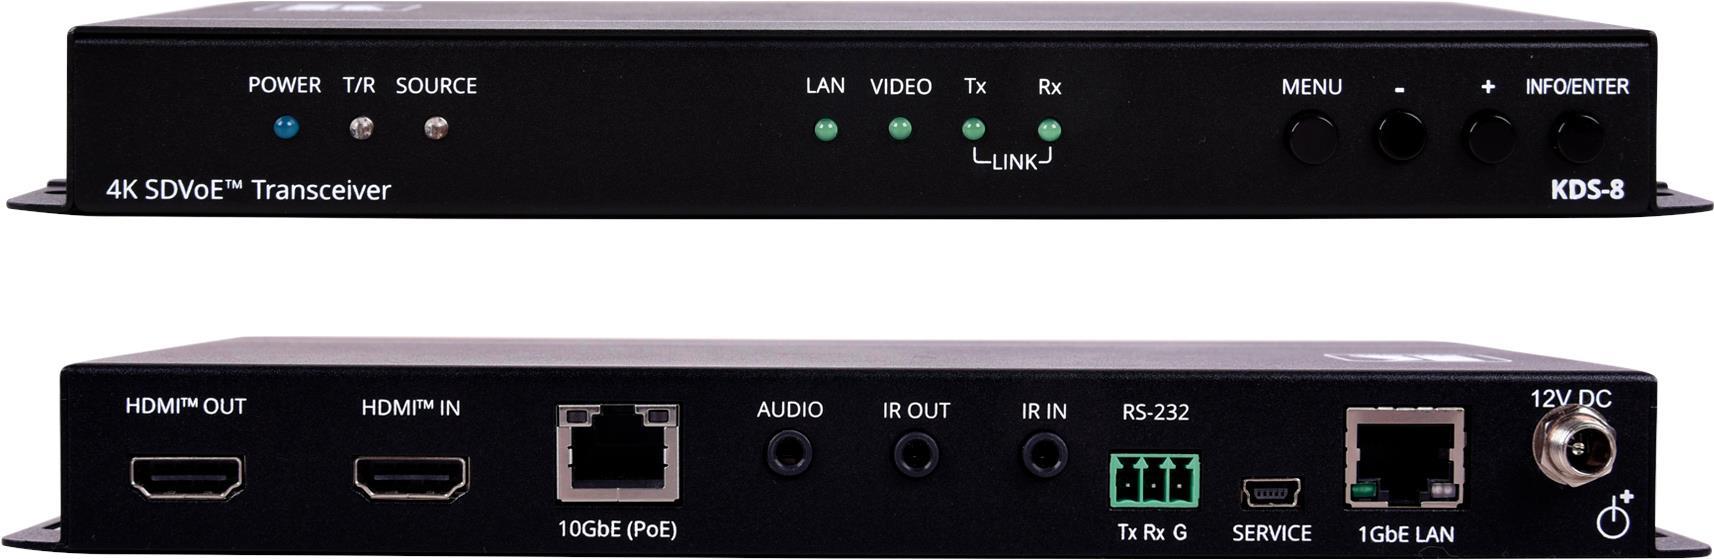 KRAMER ELECTRONICS KDS-8 - Latenzfreier 4K HDR SDVoE Video Streaming Transceiver über Kupfer (59-001890)